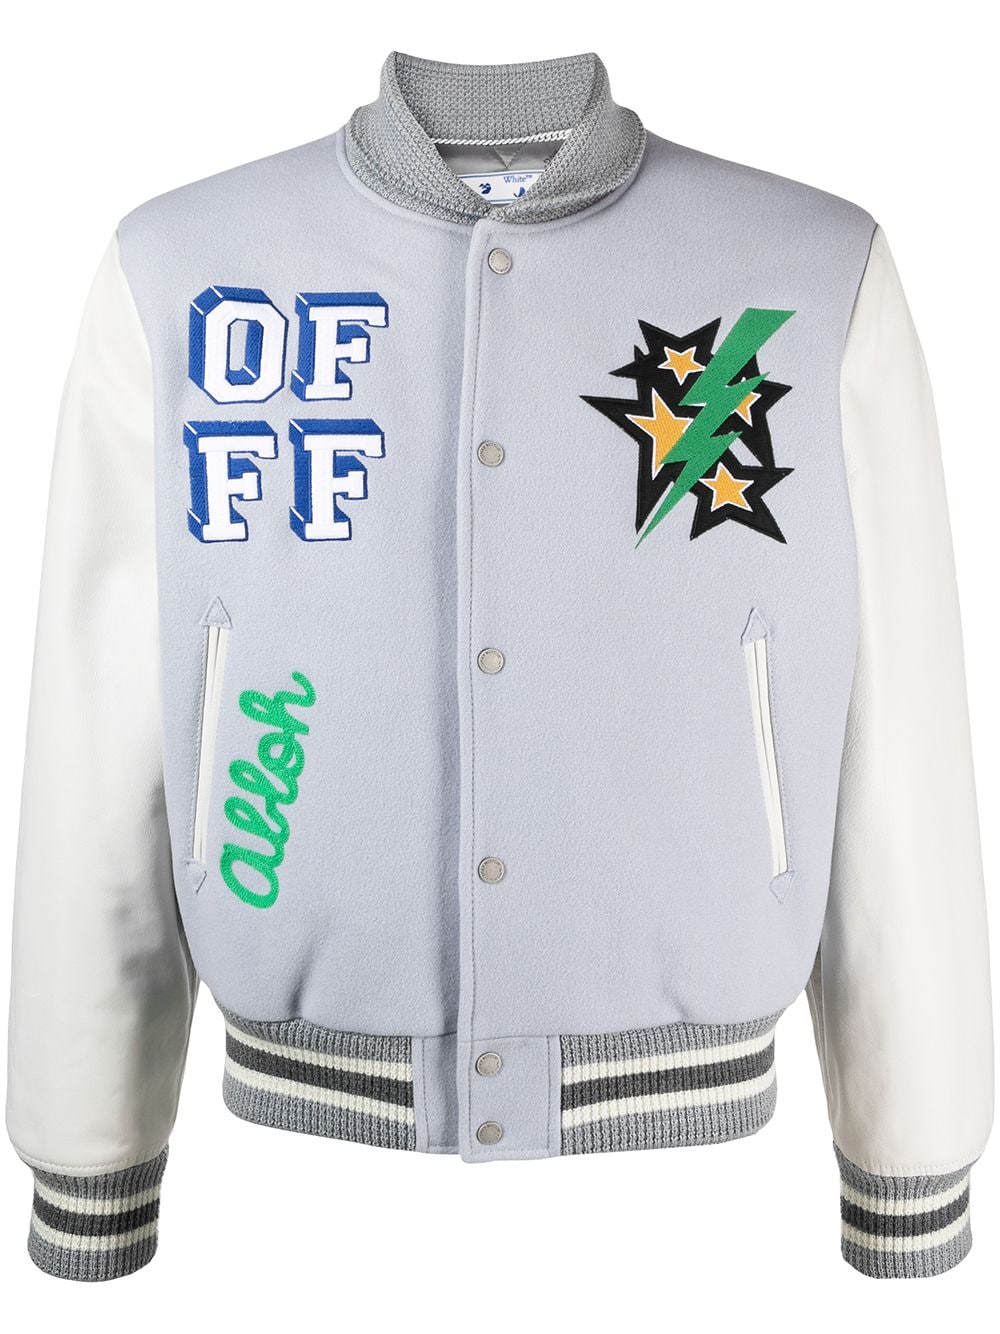 Off-White Varsity Jacket, $1,138, farfetch.com